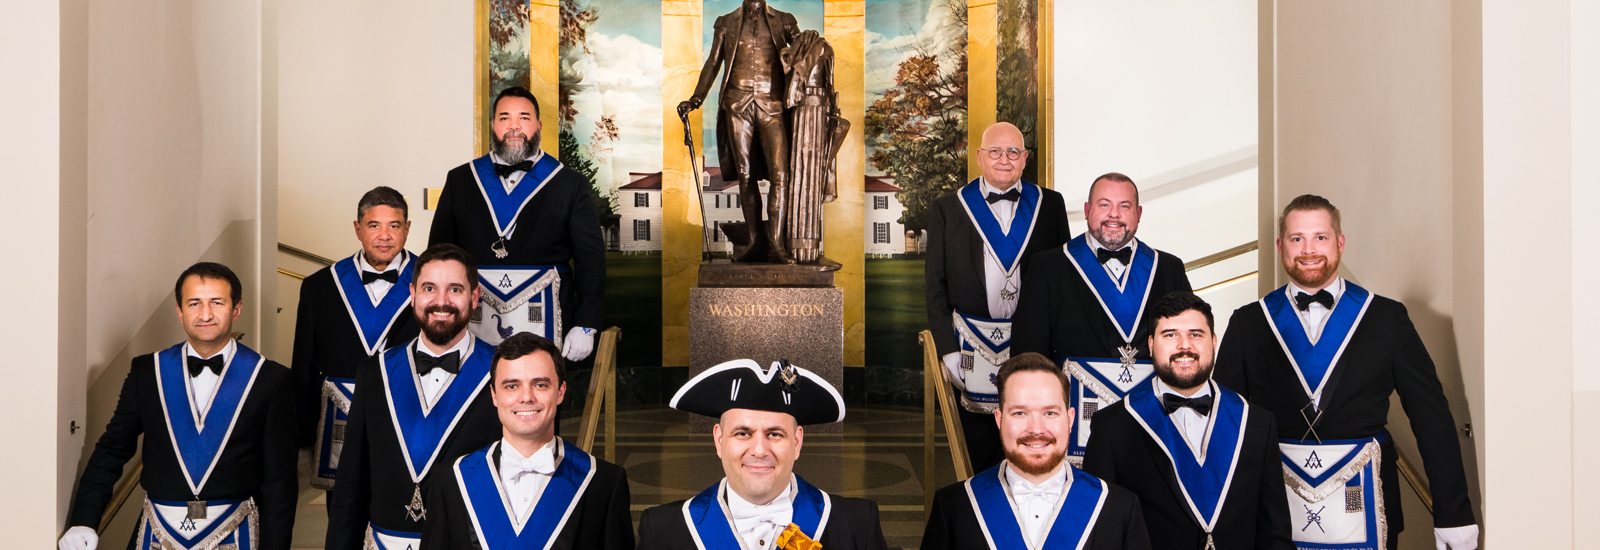 Alexandria-Washington Lodge No. 22 Recognizes Outstanding Community Service with Prestigious Award